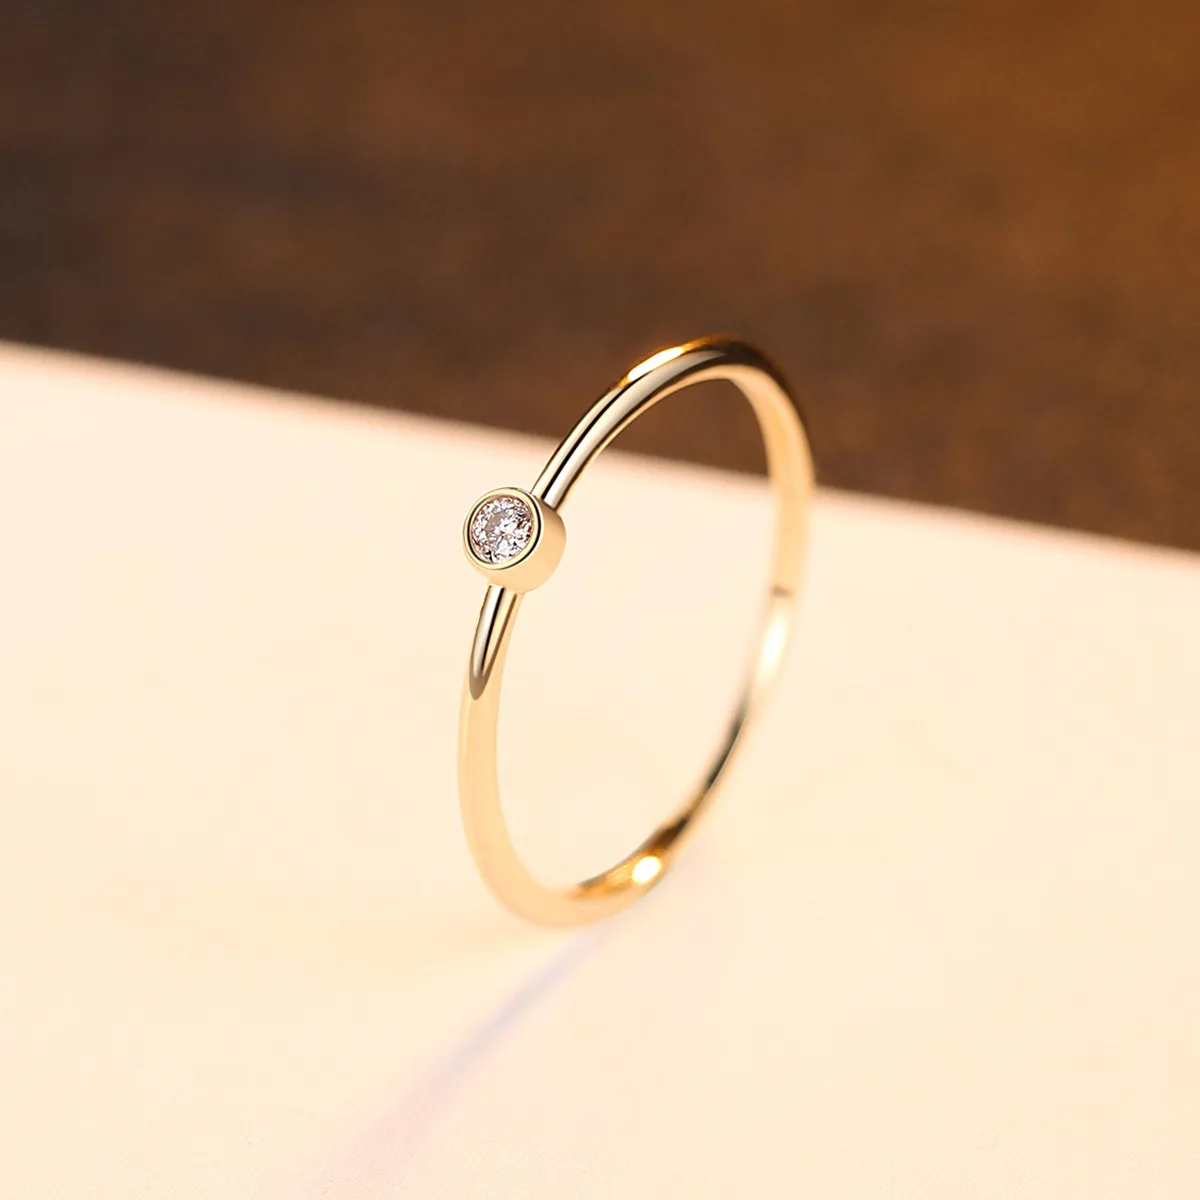 Dropshipping Dainty Design Elegant Cute Au585 Gold 14k Yellow Gold Wedding Band Ring Buy 14k Gold Ring 14k Gold Purity Rings Gold Filled Wedding Rings Product On Alibaba Com